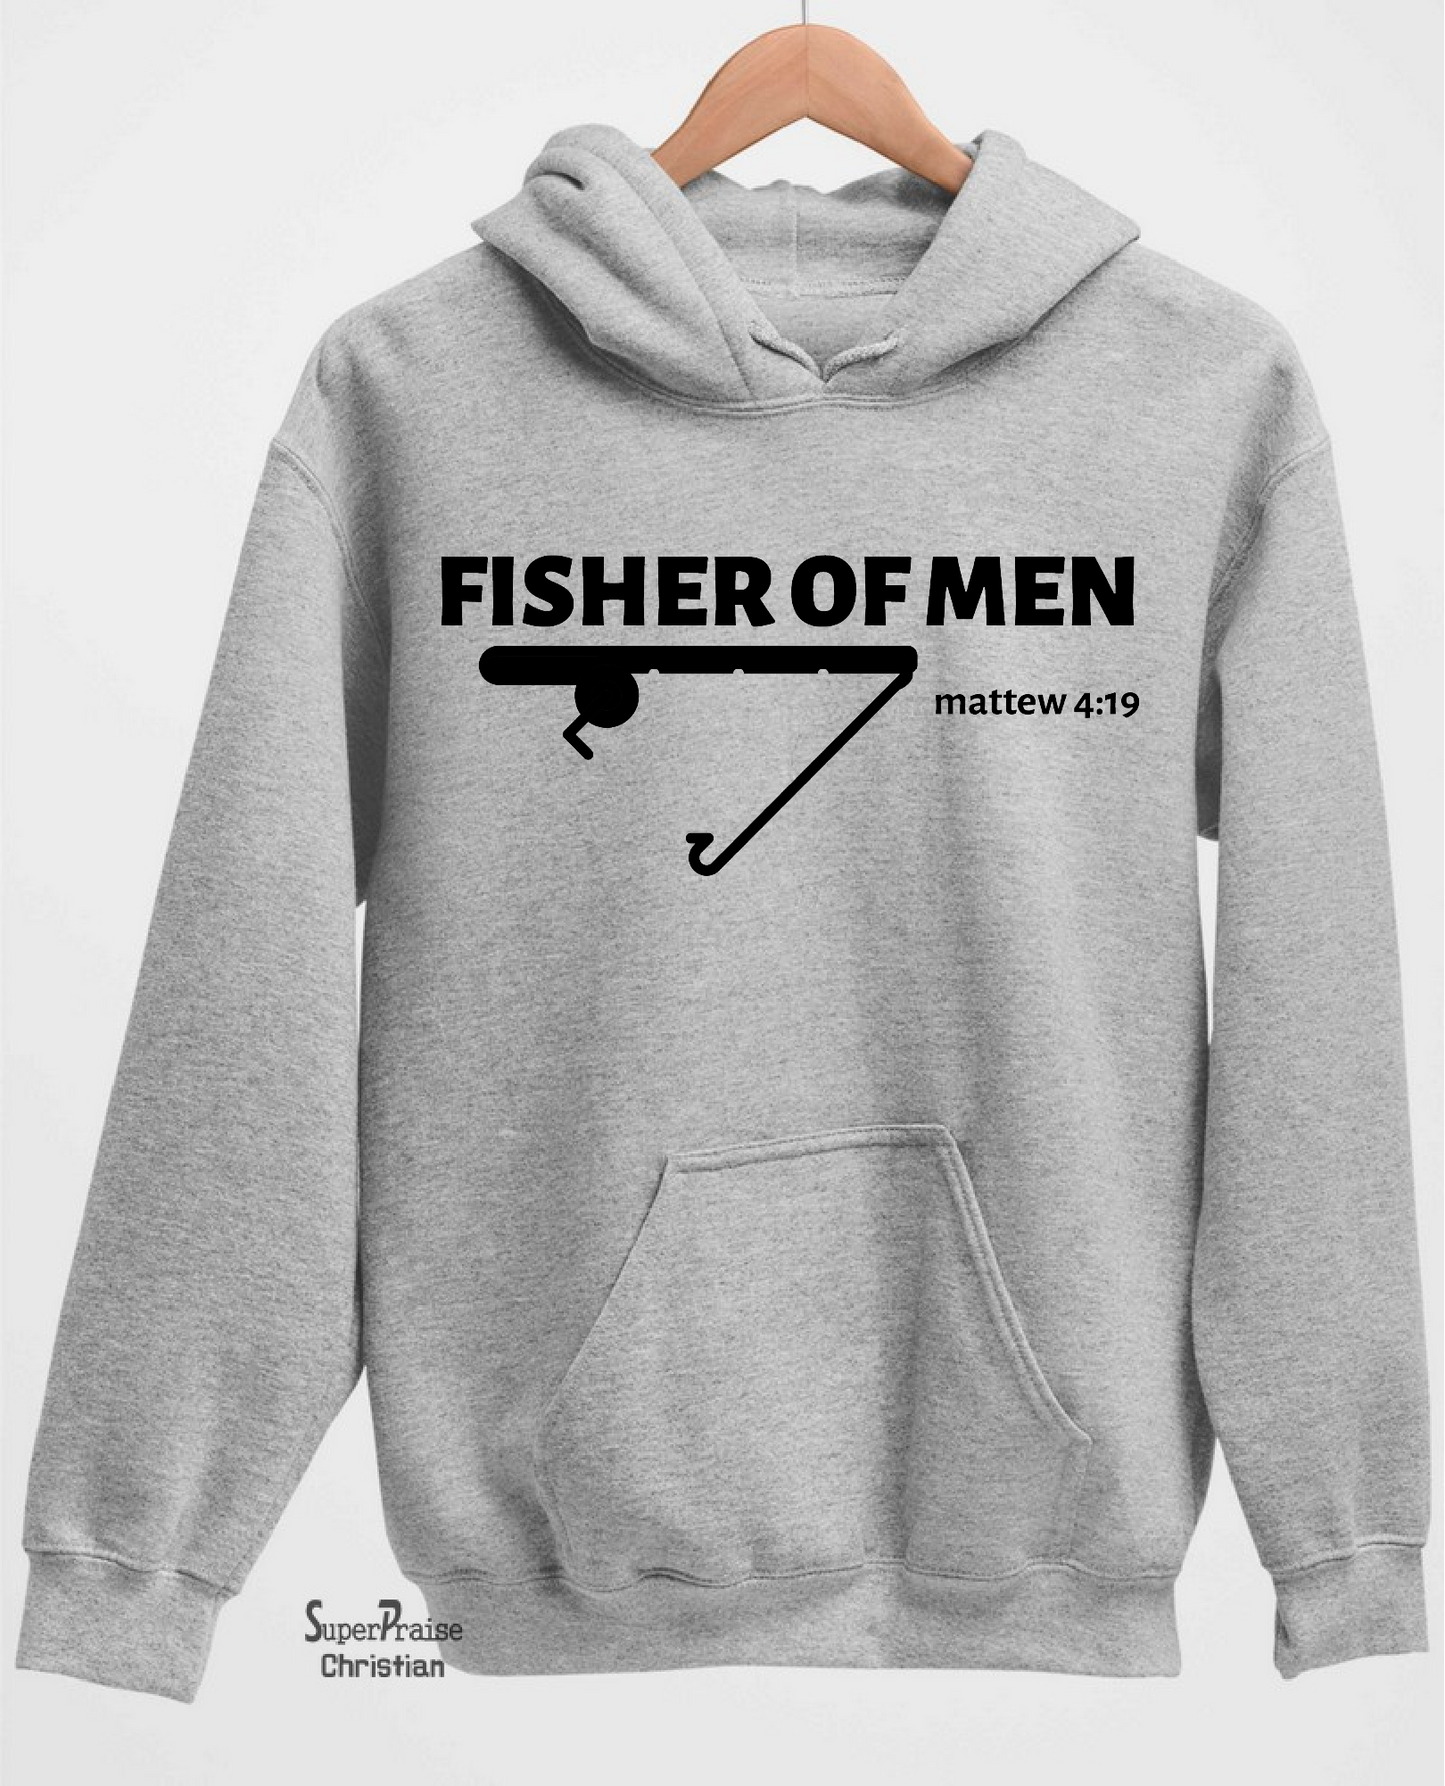 Fisher of Men Hoodie Christian Sweatshirt